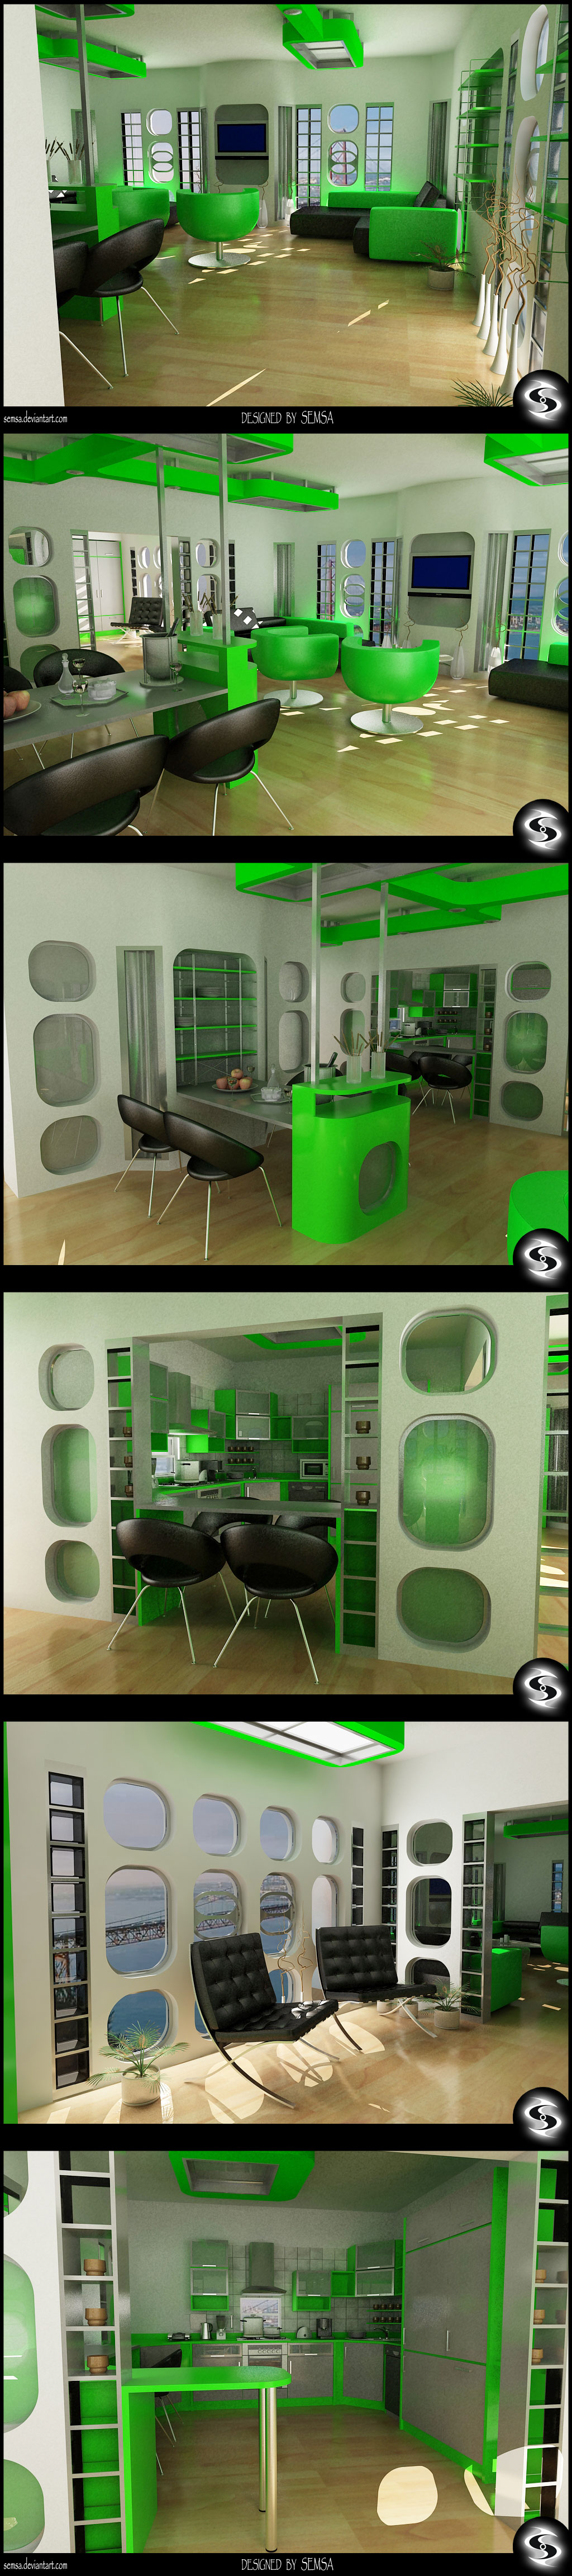 Green Kitchen N' Living Room